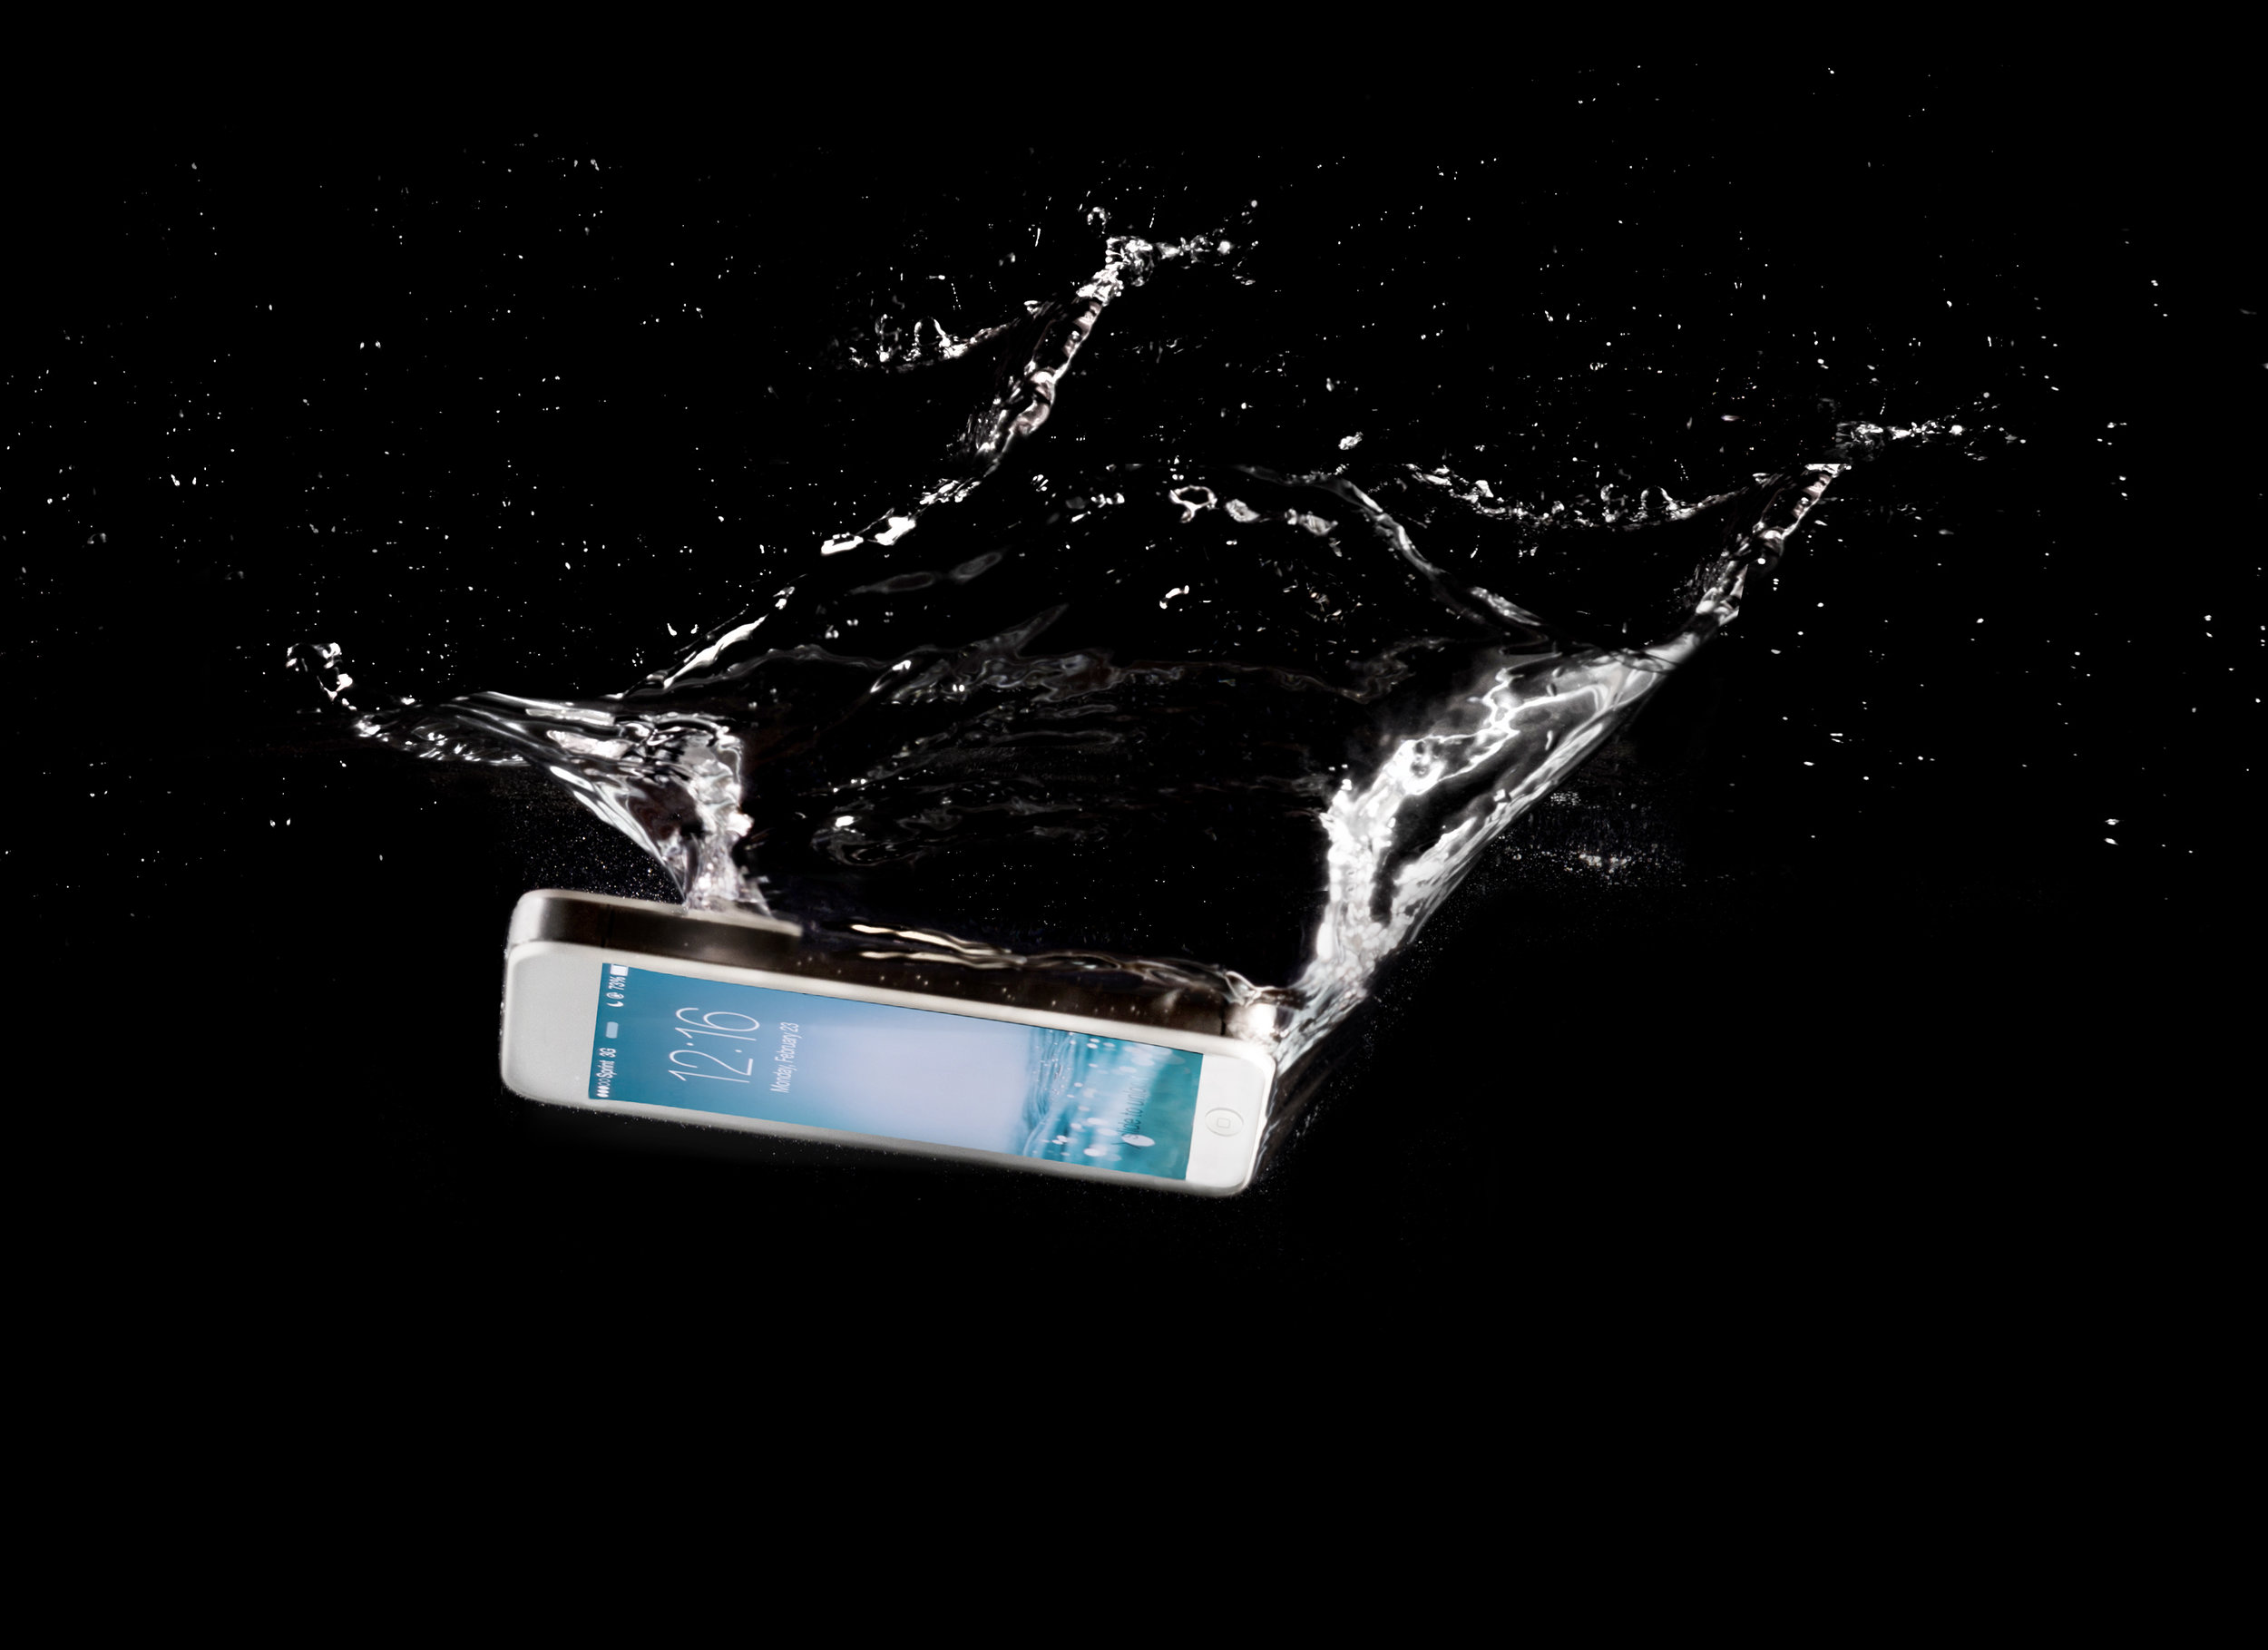 Water Iphone splash.jpg